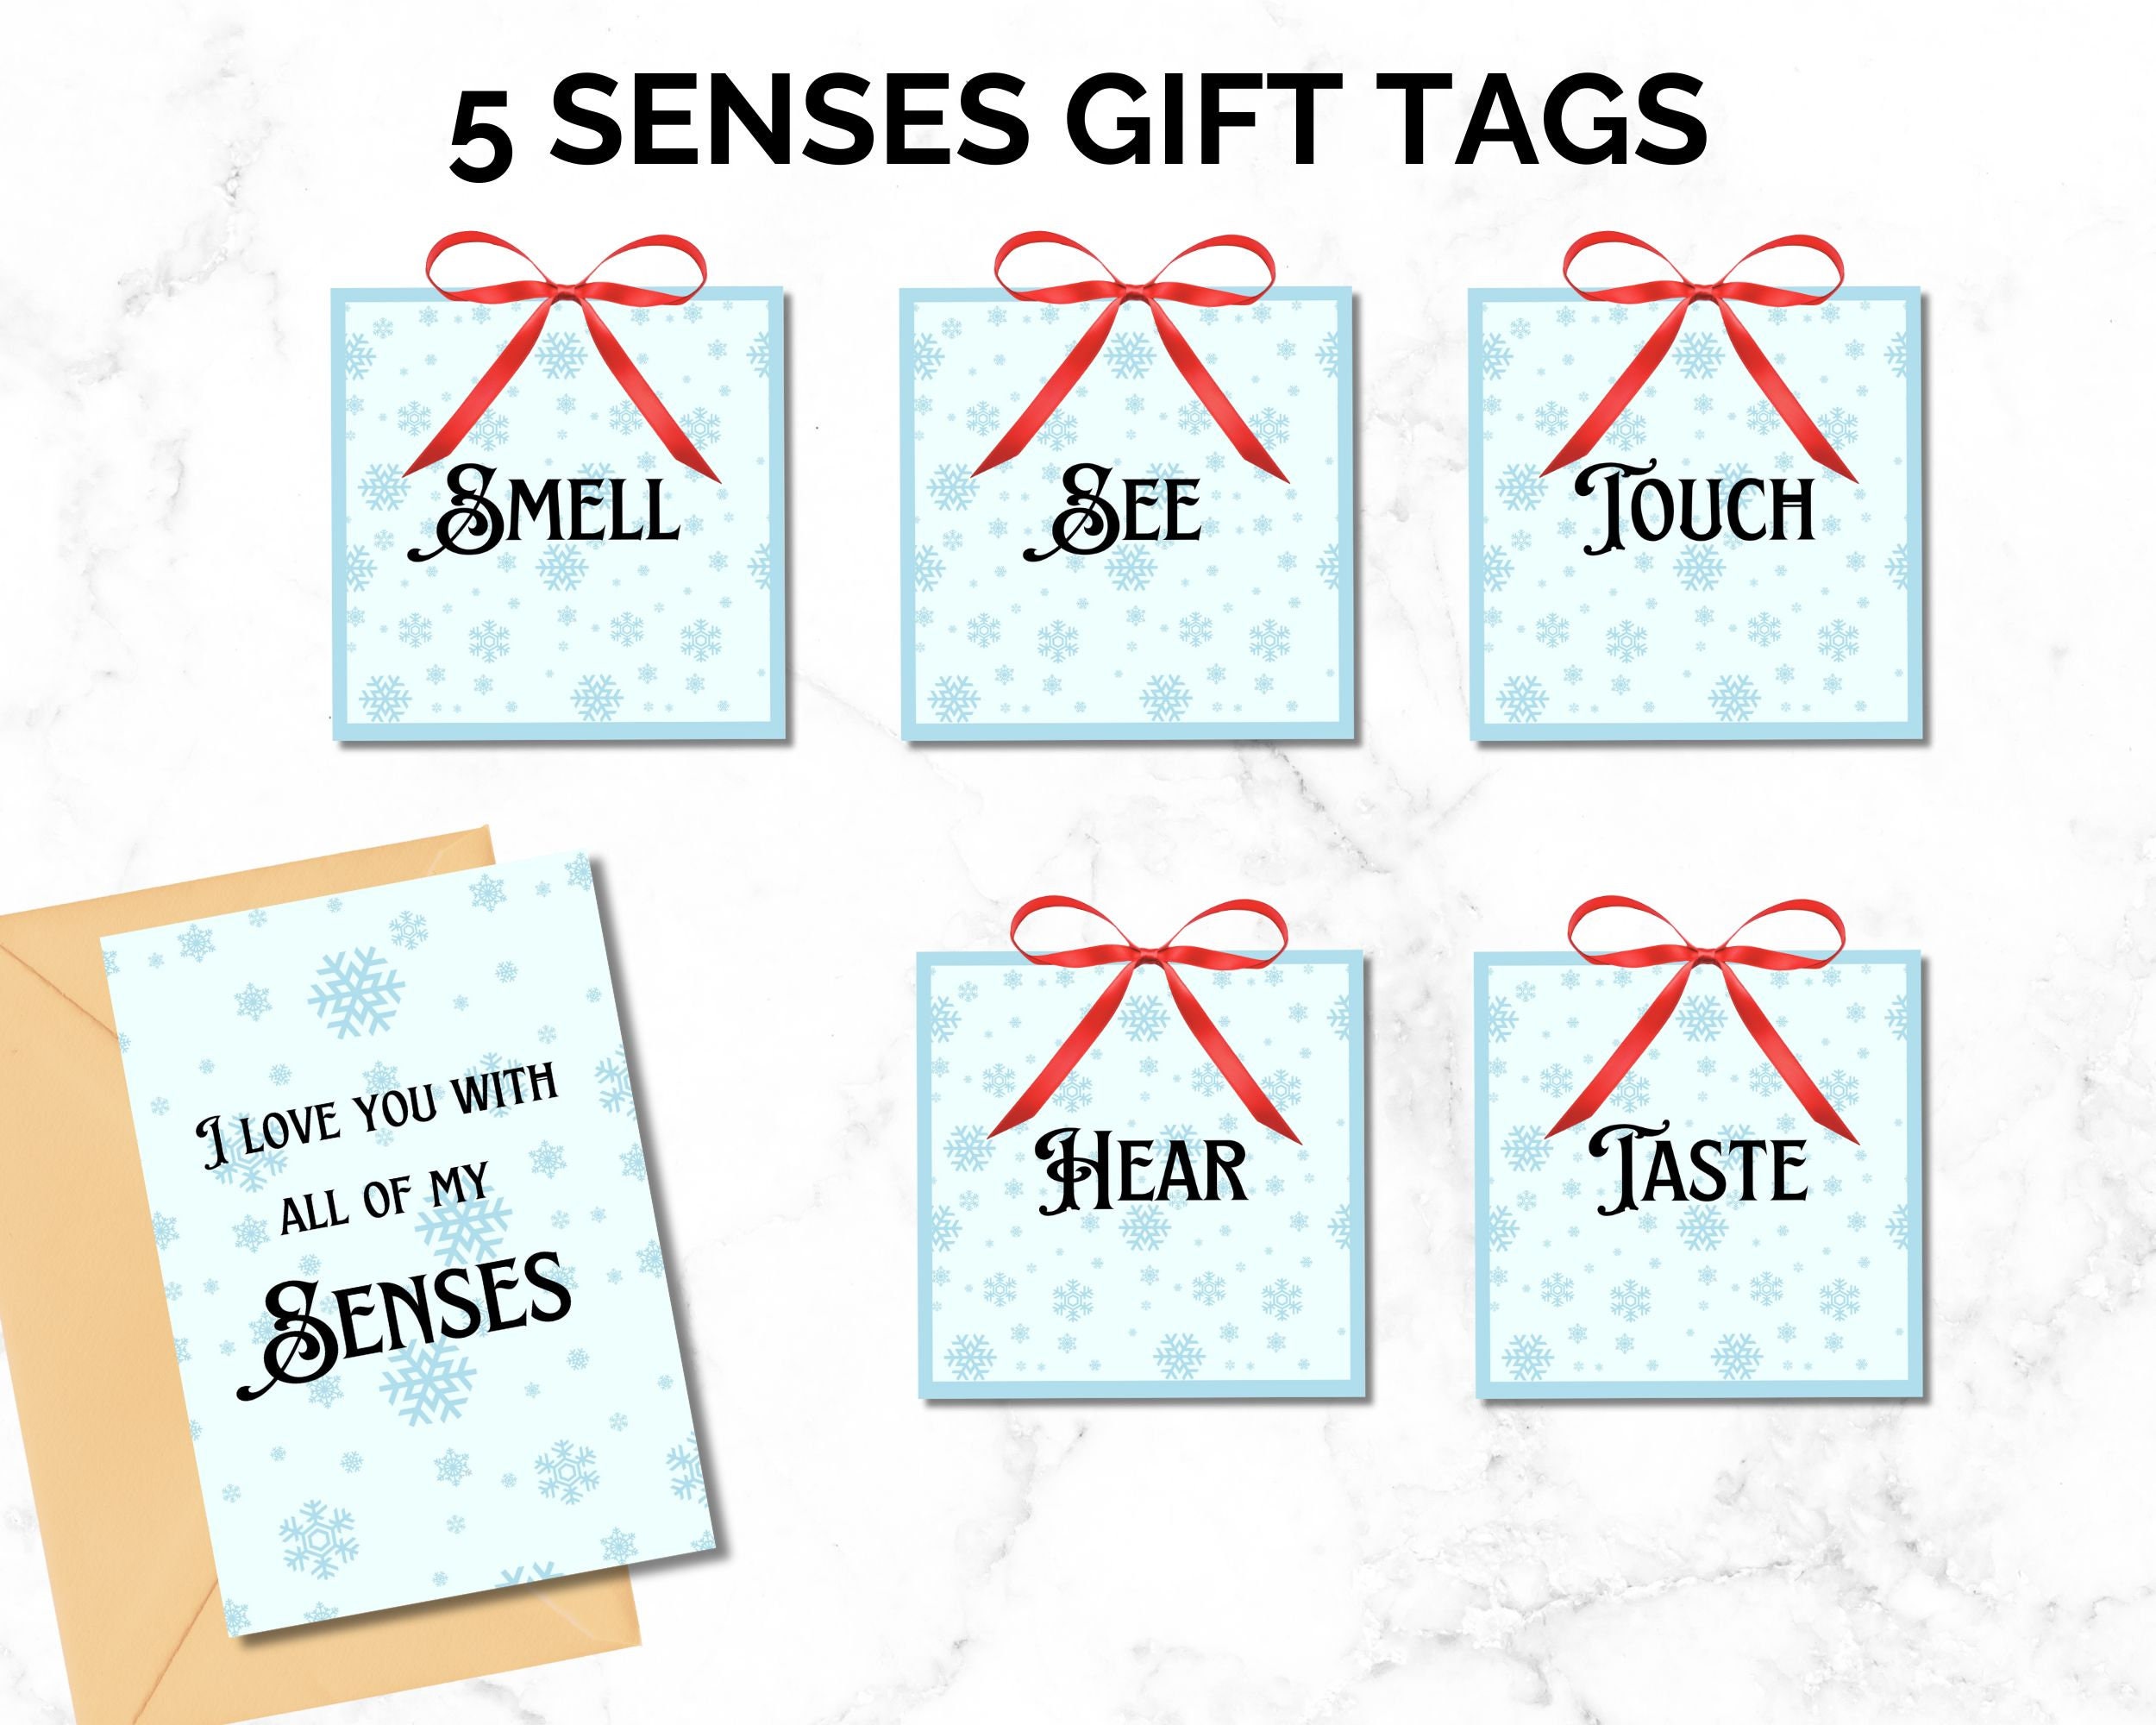 Hubby's Birthday Gifts #5sensesgift #fivesenses #fyp #viral #husbandgi, 5  senses gift for my boyfriend